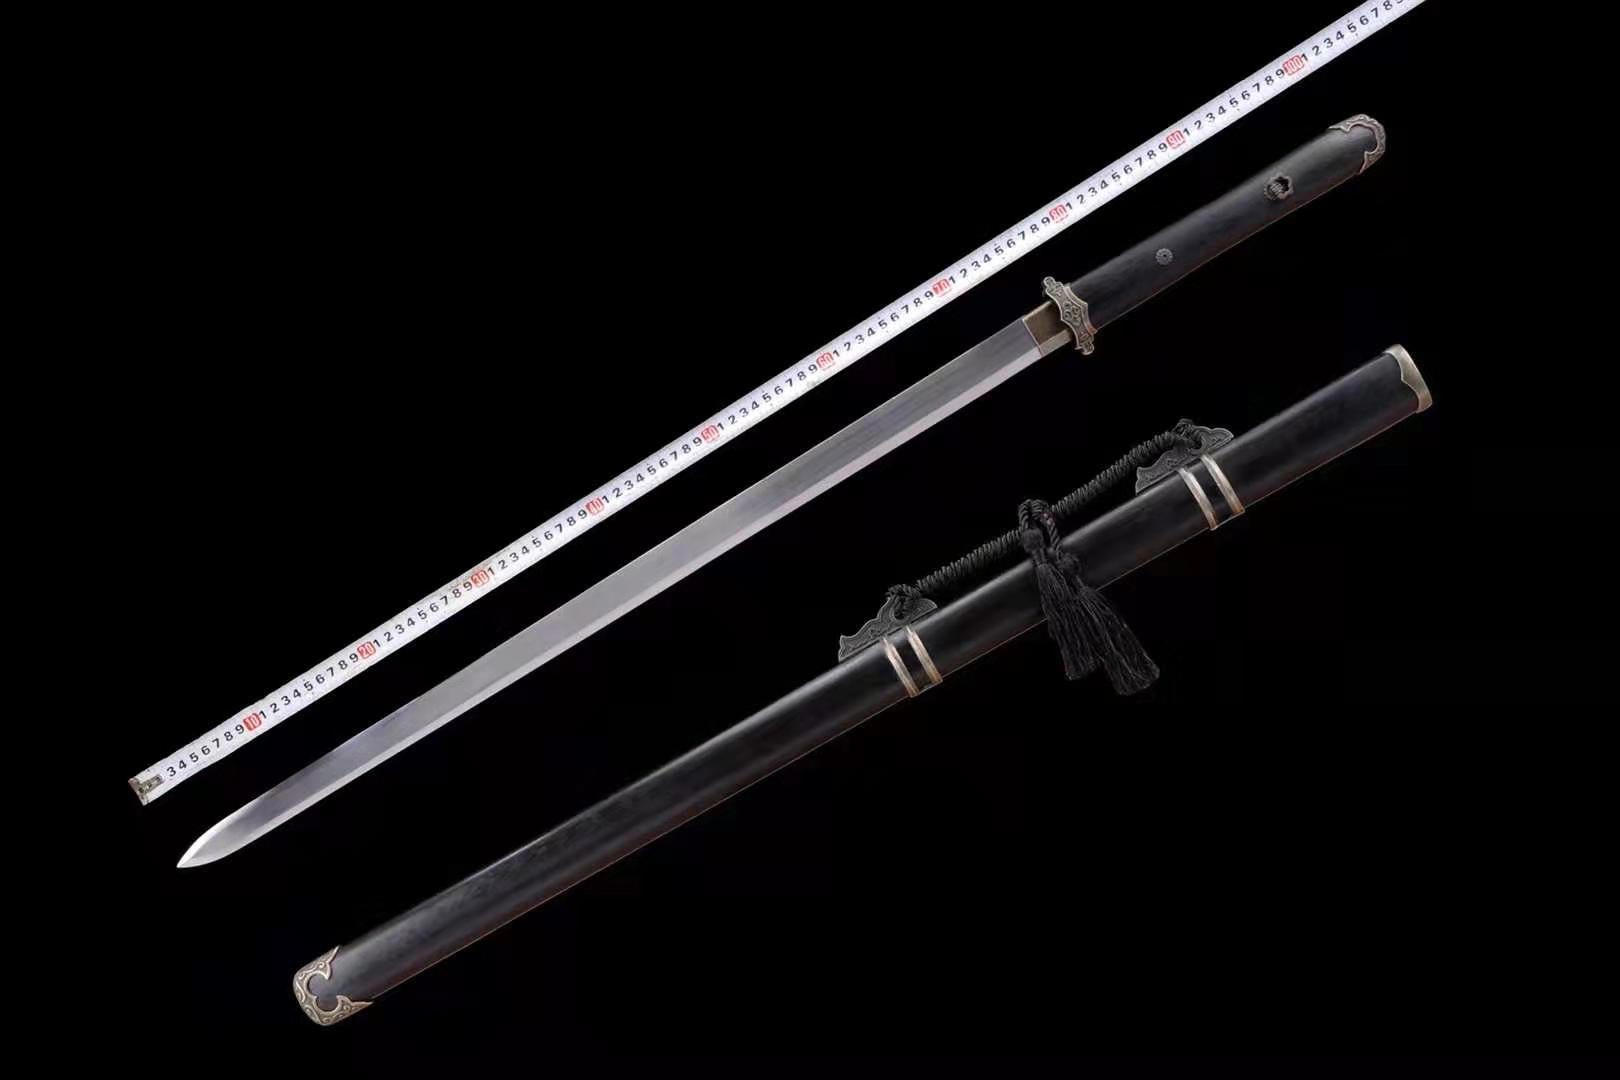 The Ken Handmade Chinese Sword Manganese Steel-Romance of Men